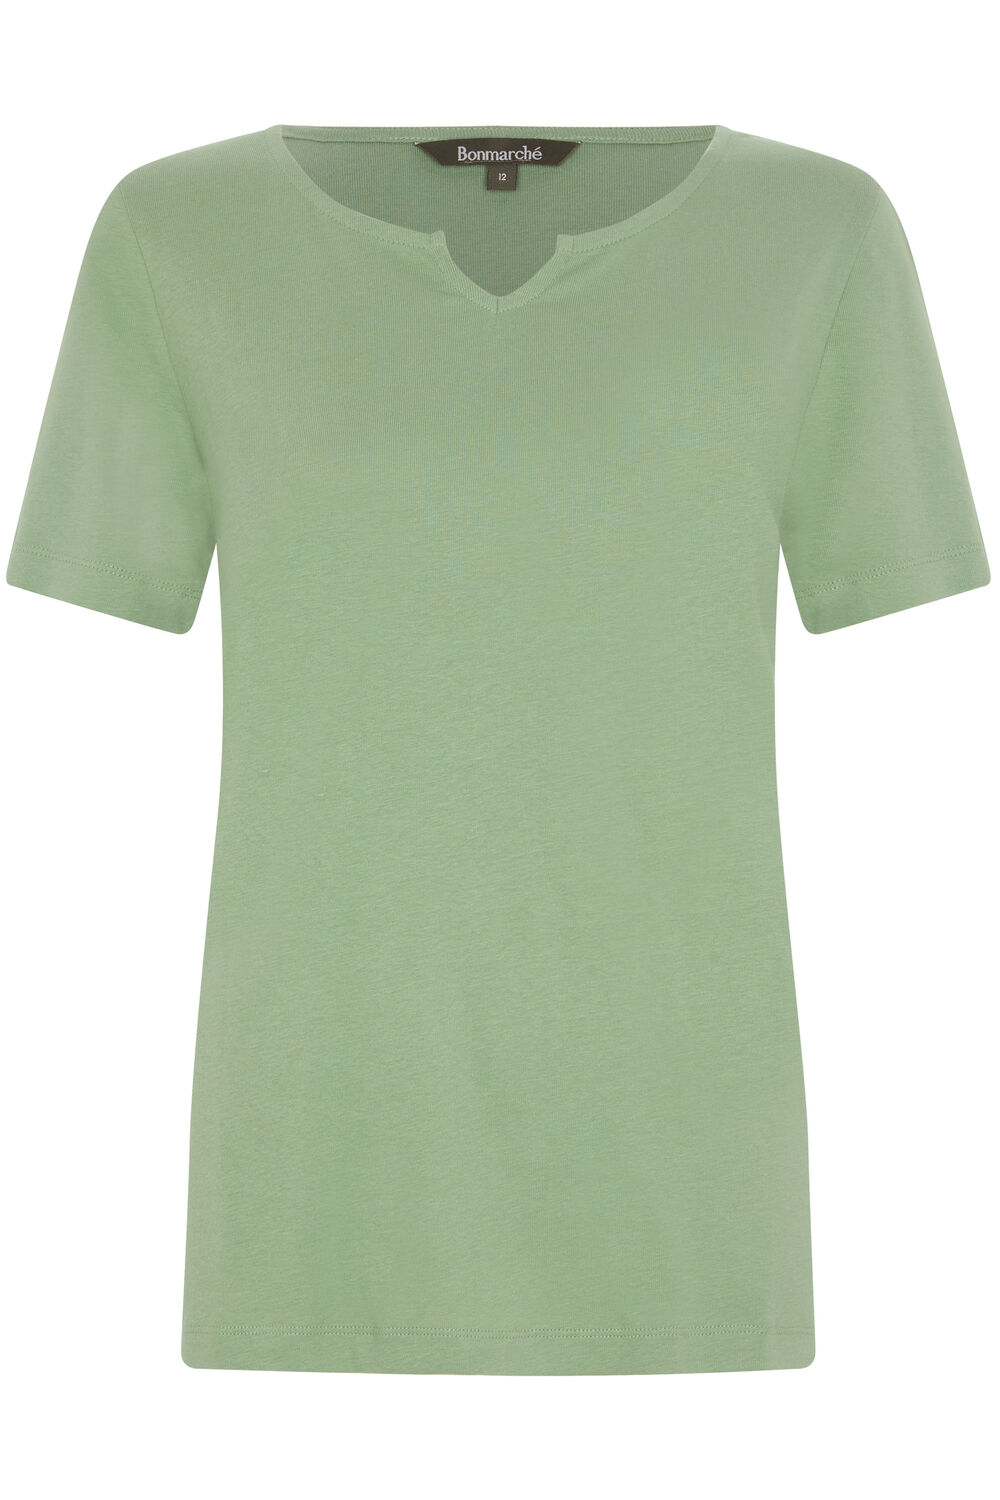 Bonmarche Khaki Short Sleeve Plain Notch Neck T-Shirt, Size: 22